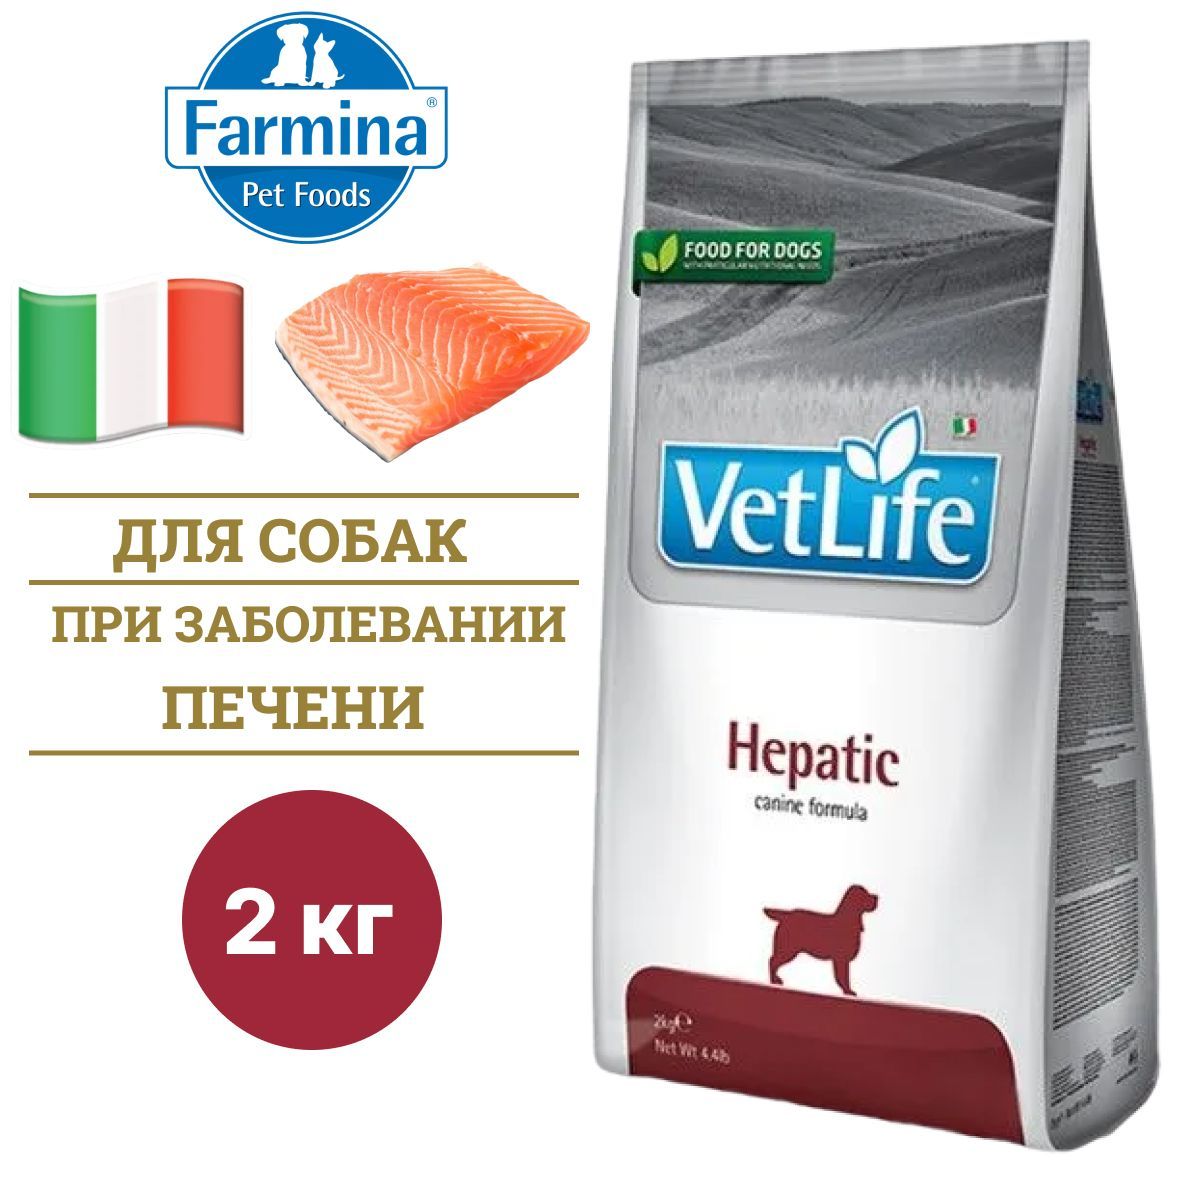 Vet Life hepatic корм для собак.